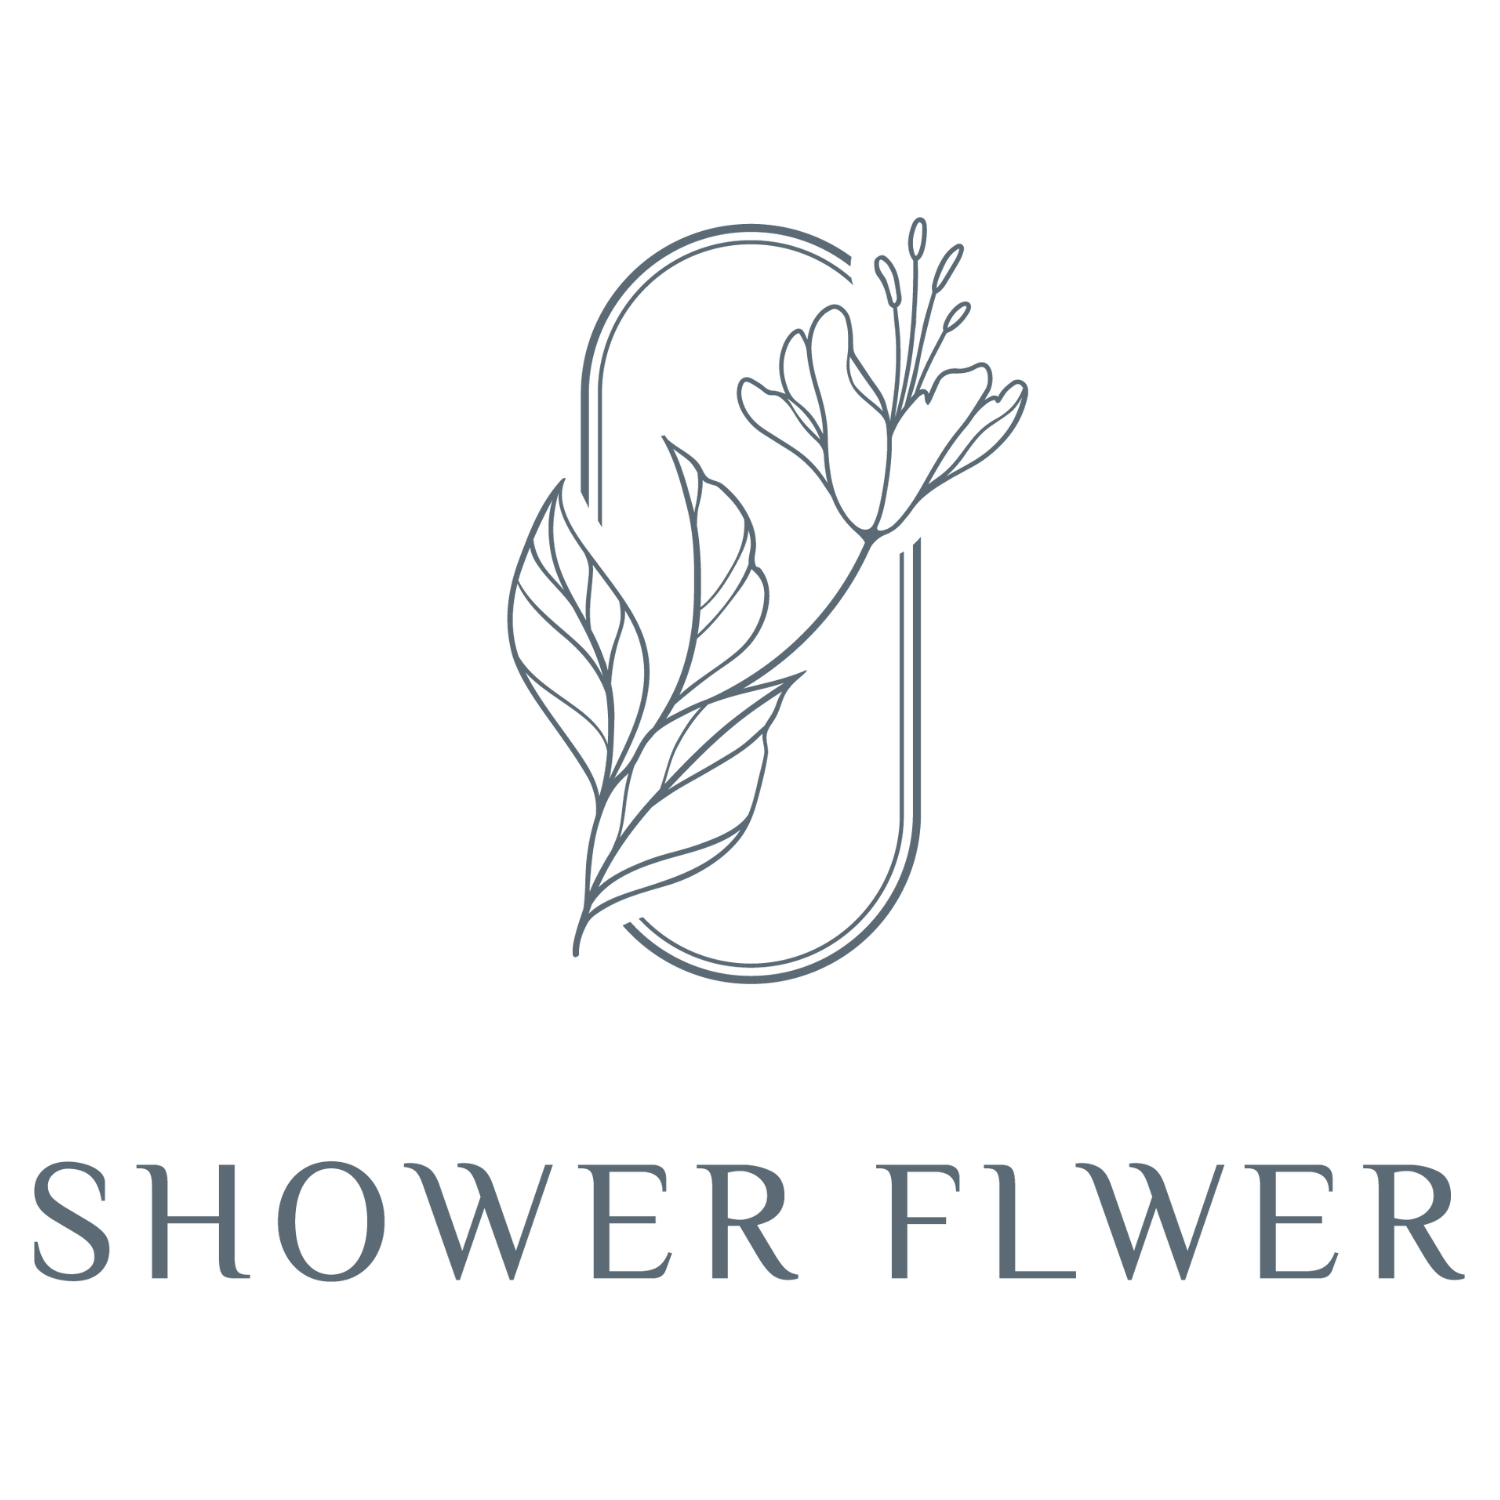 Shower Flwer